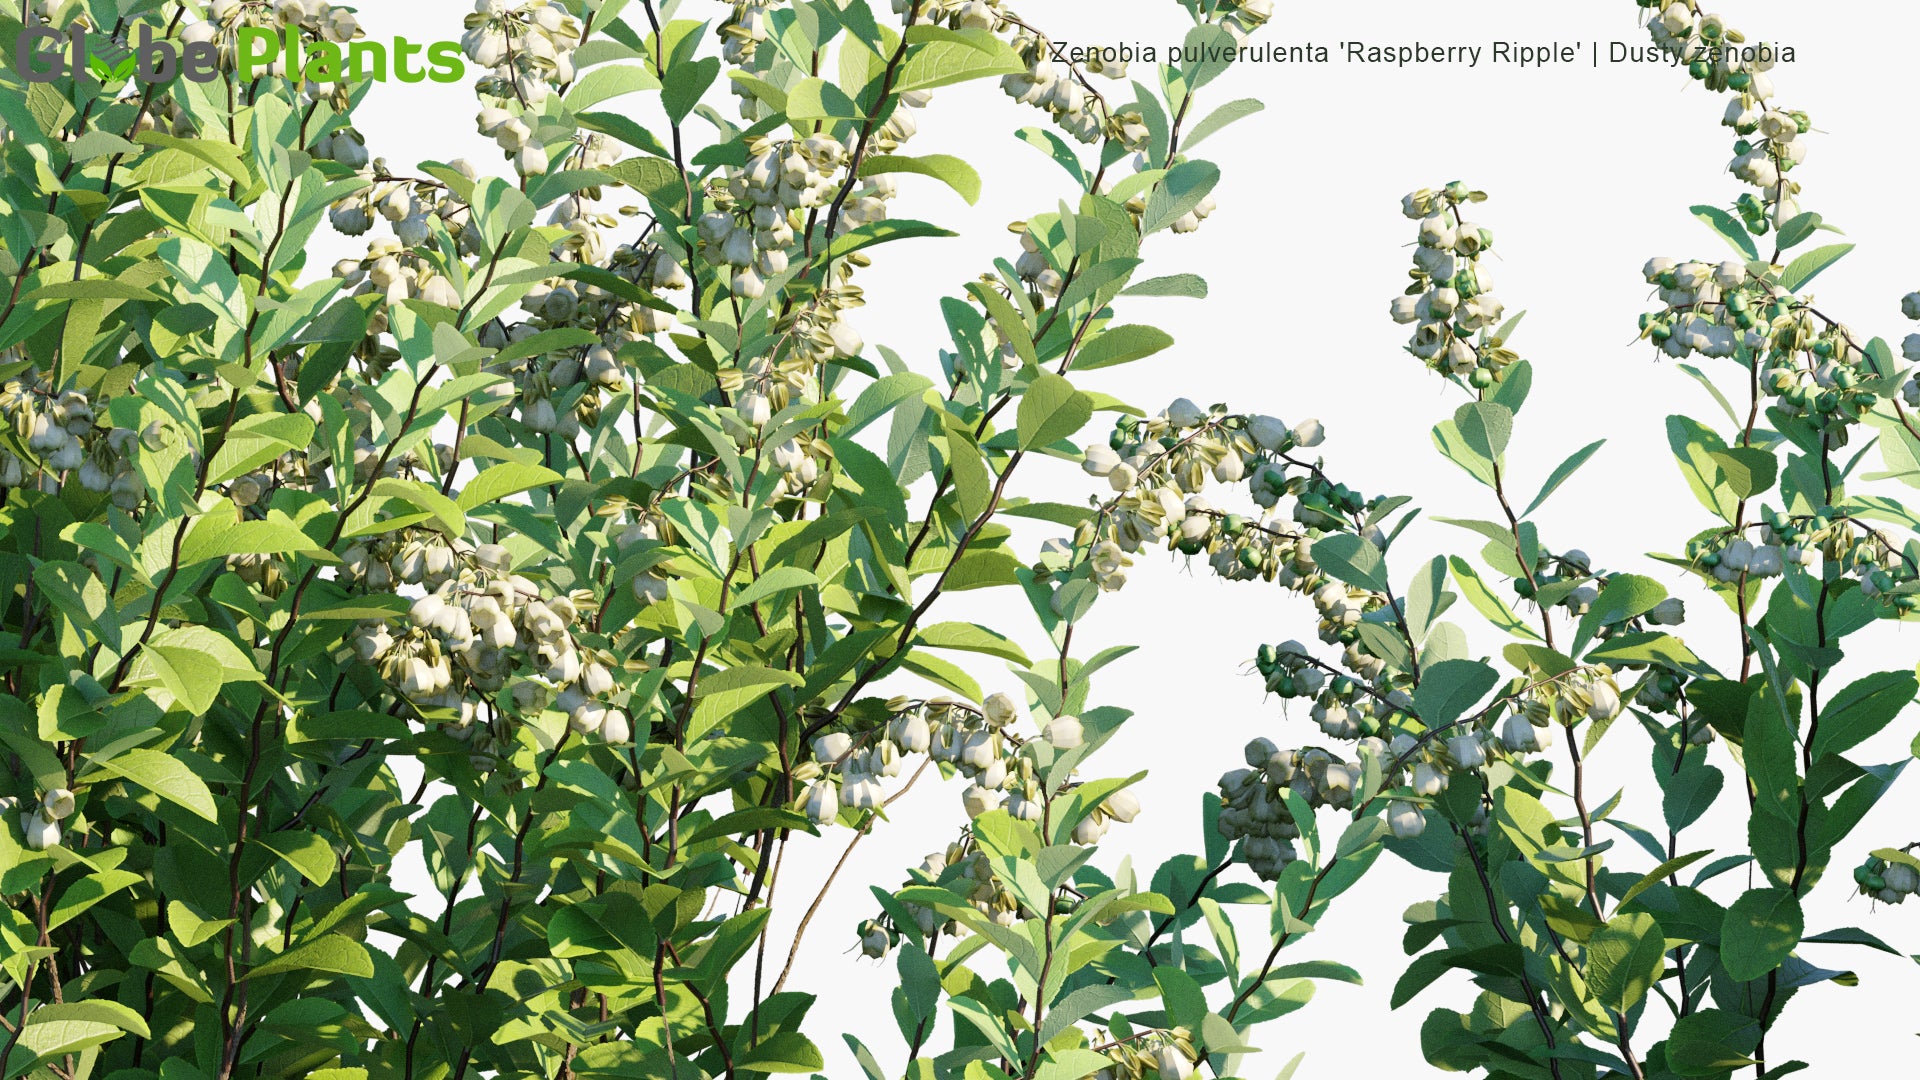 Zenobia Pulverulenta 'Raspberry Ripple' - Dusty Zenobia, Honeycup